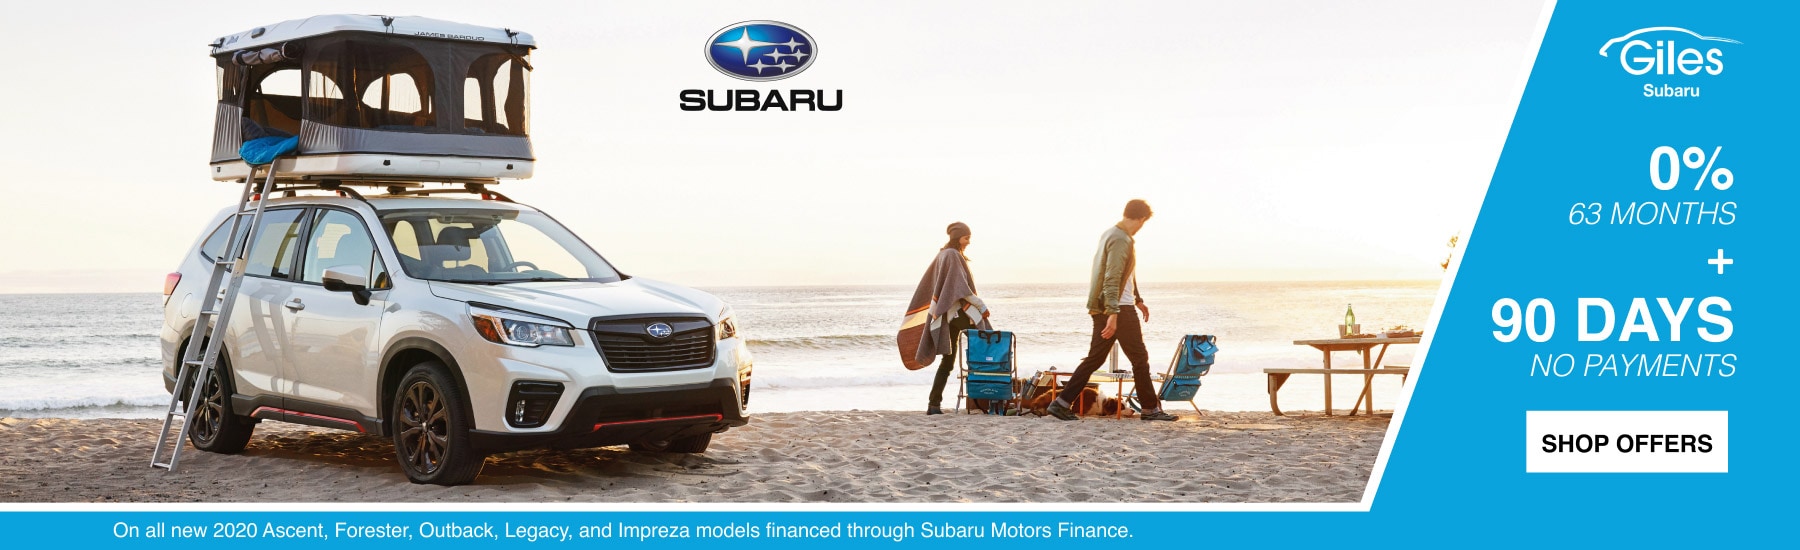 Subaru Incentives & Offers Giles Subaru